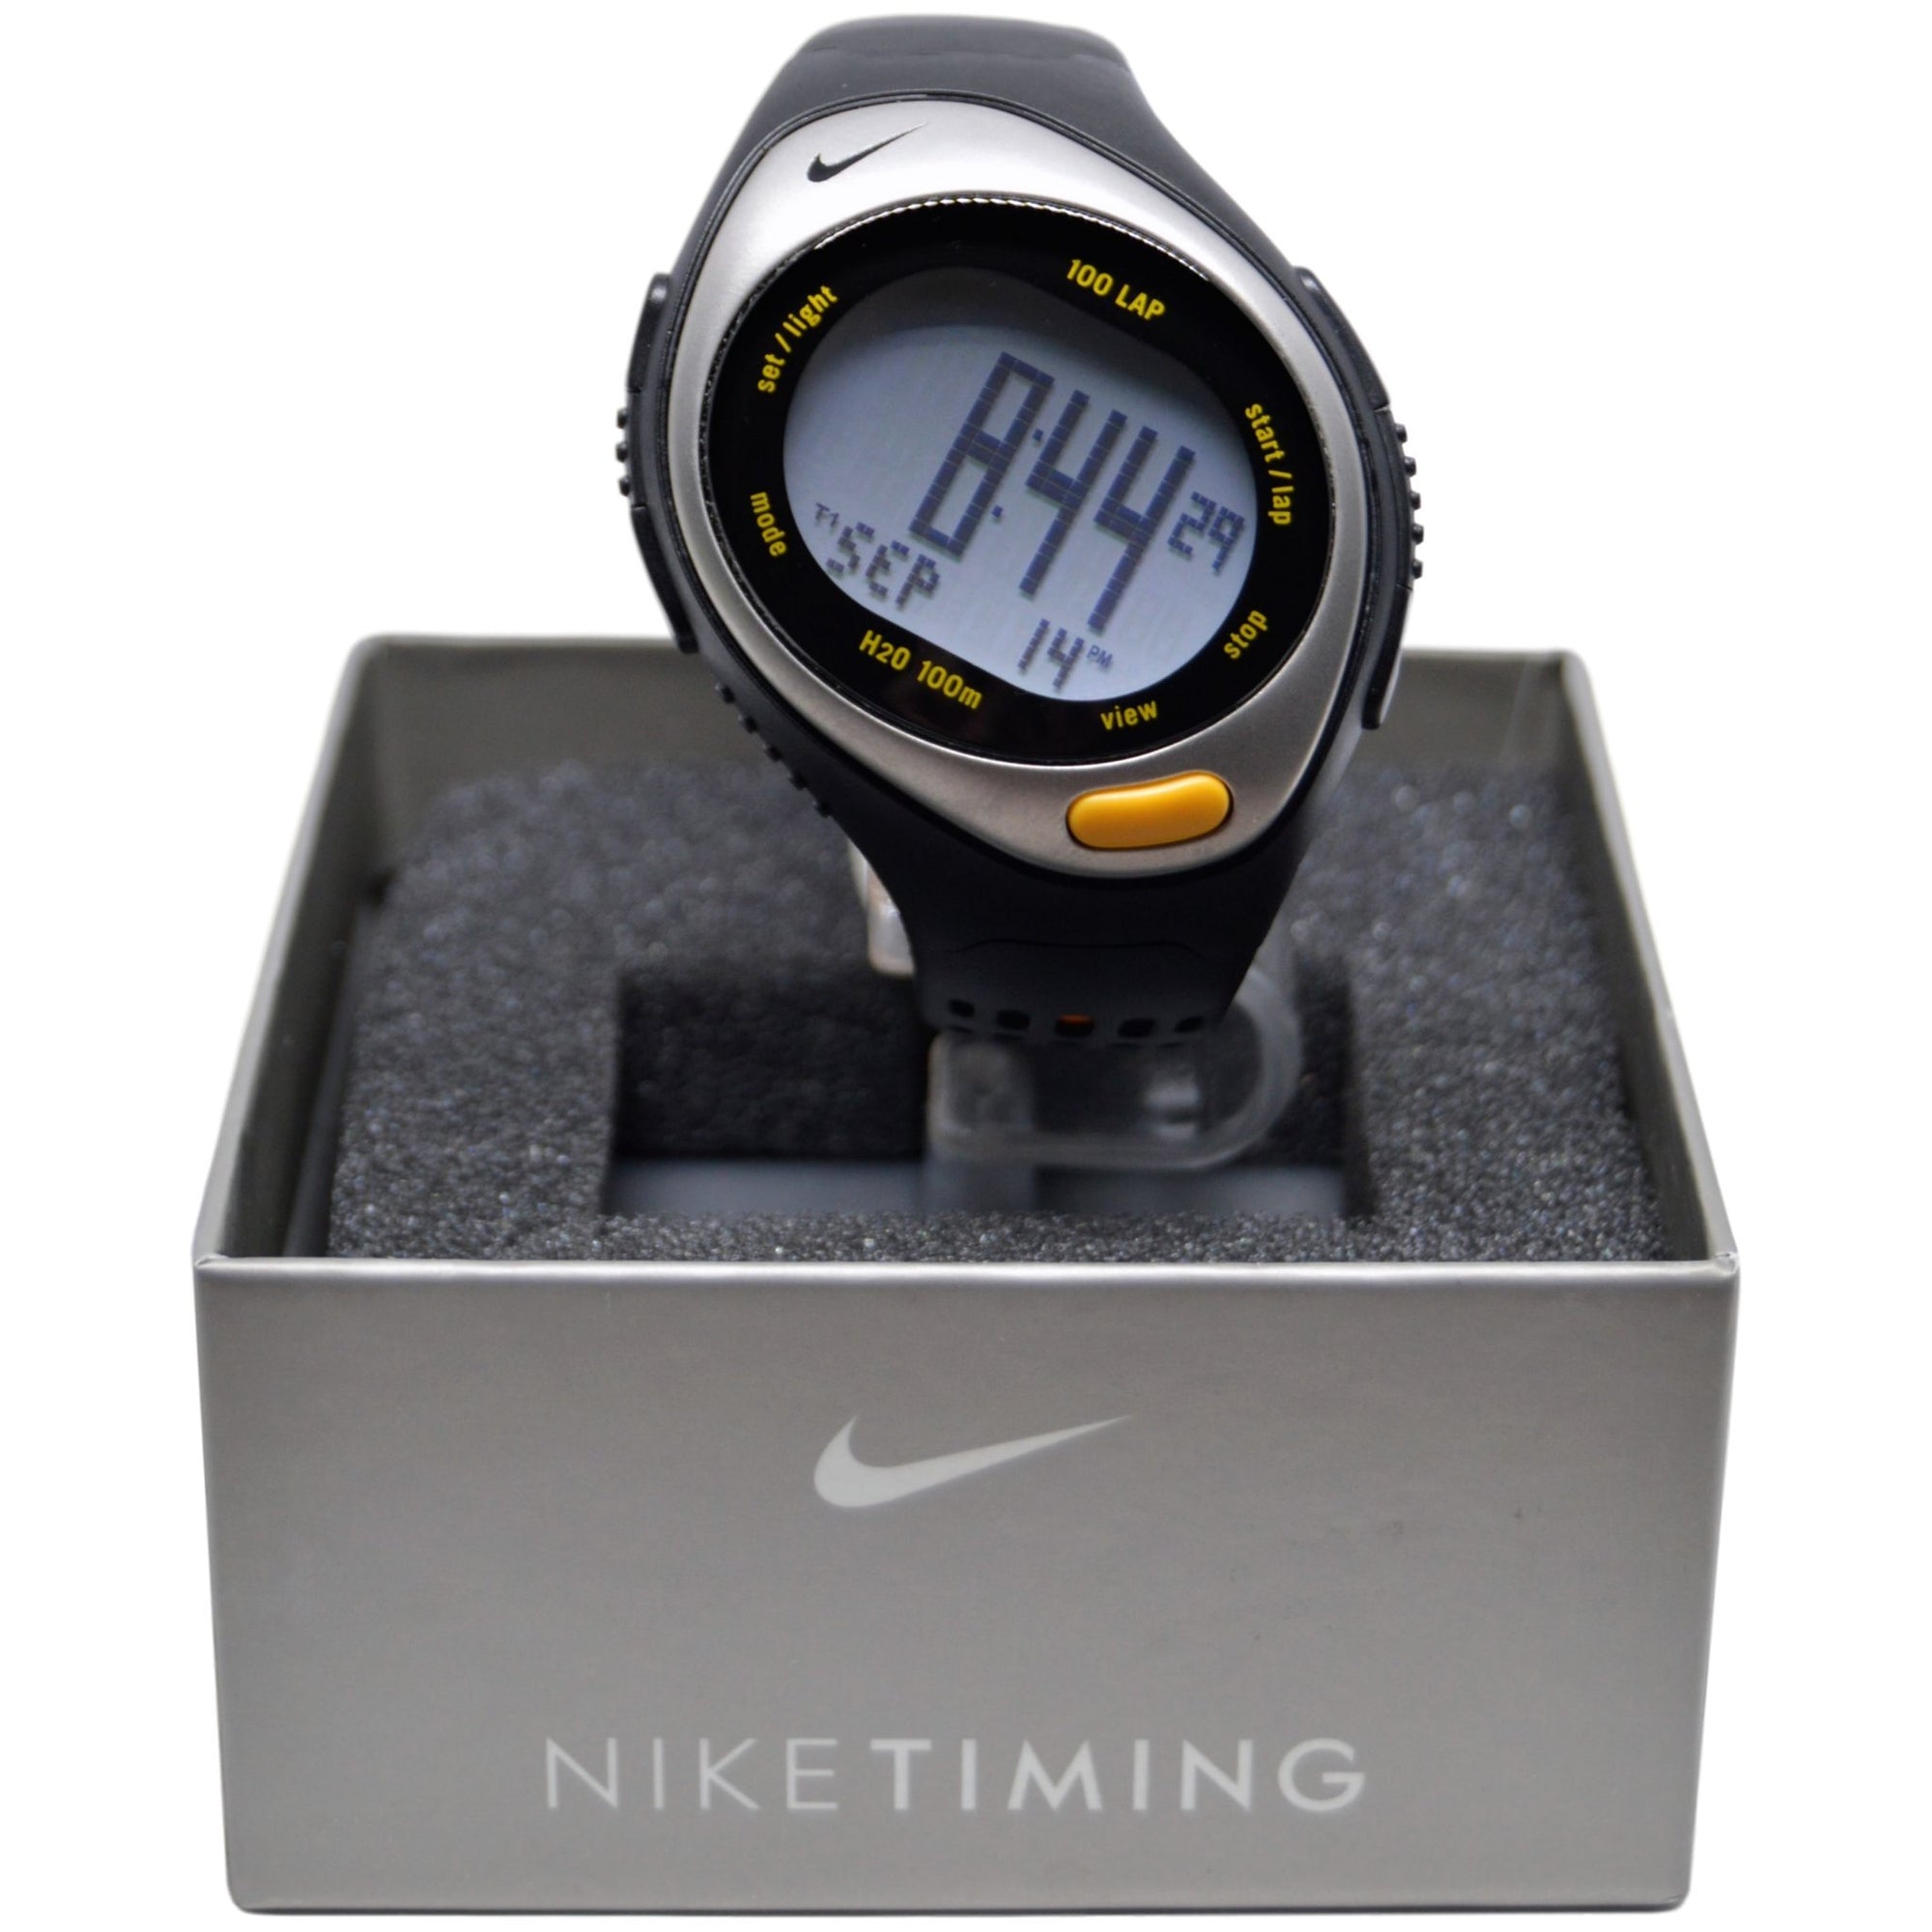 Nike Triax Speed 100 Super - Yellow Watch | Rare Find | - Elevn:59